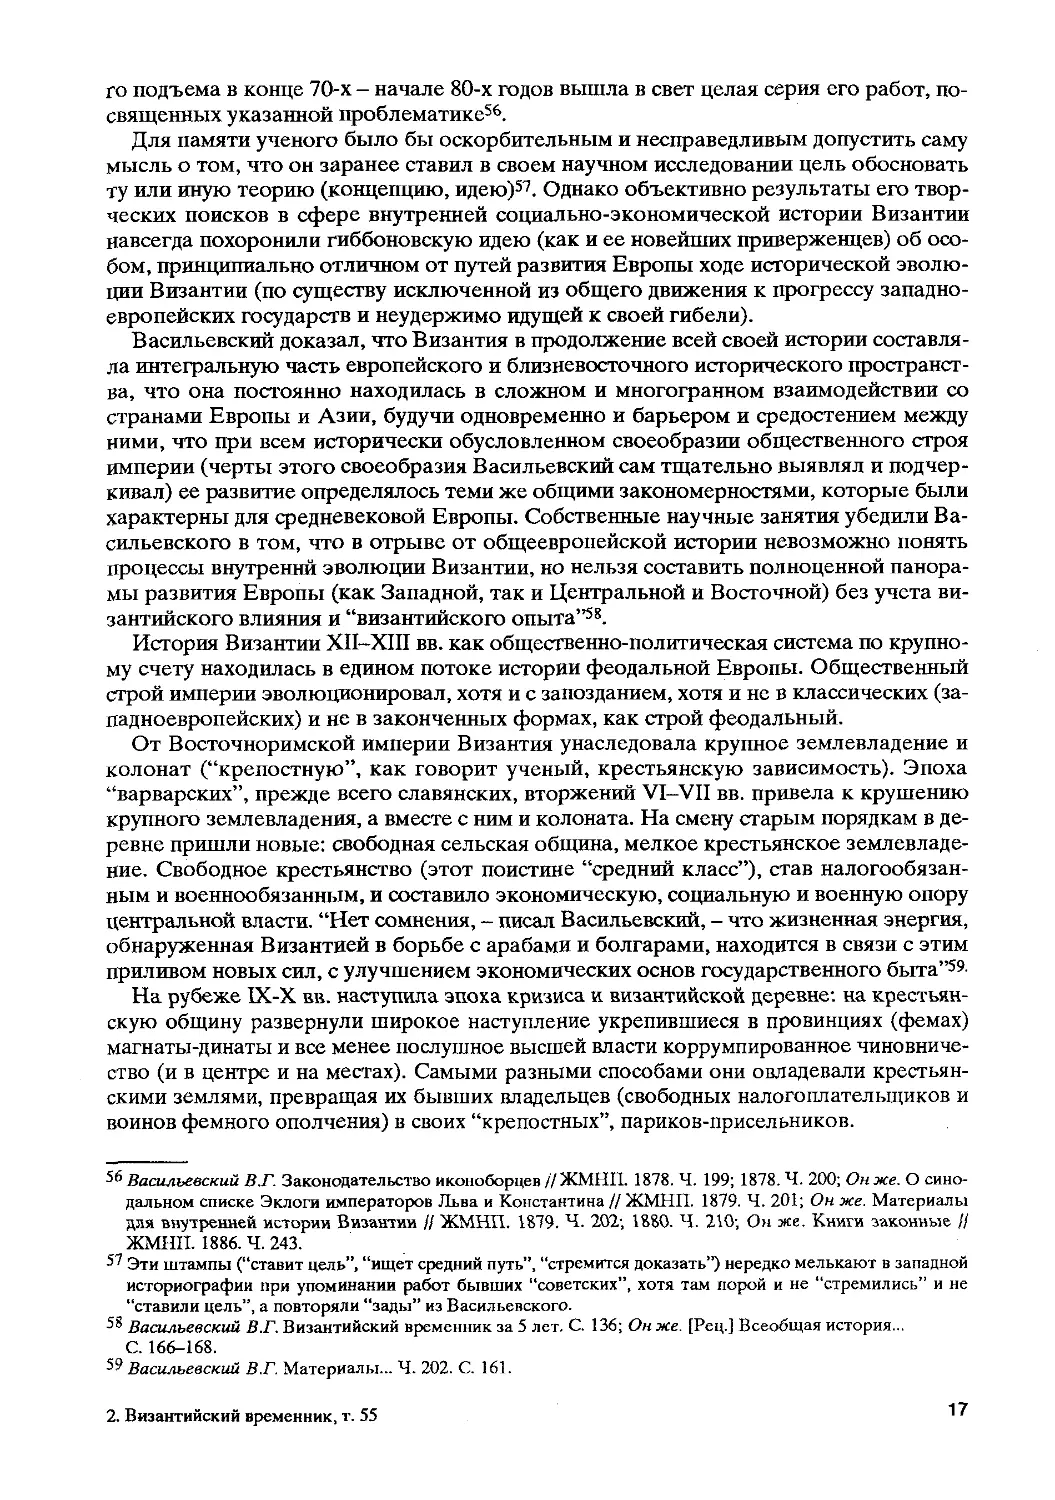 BB 55_1 Á994ù 17.pdf